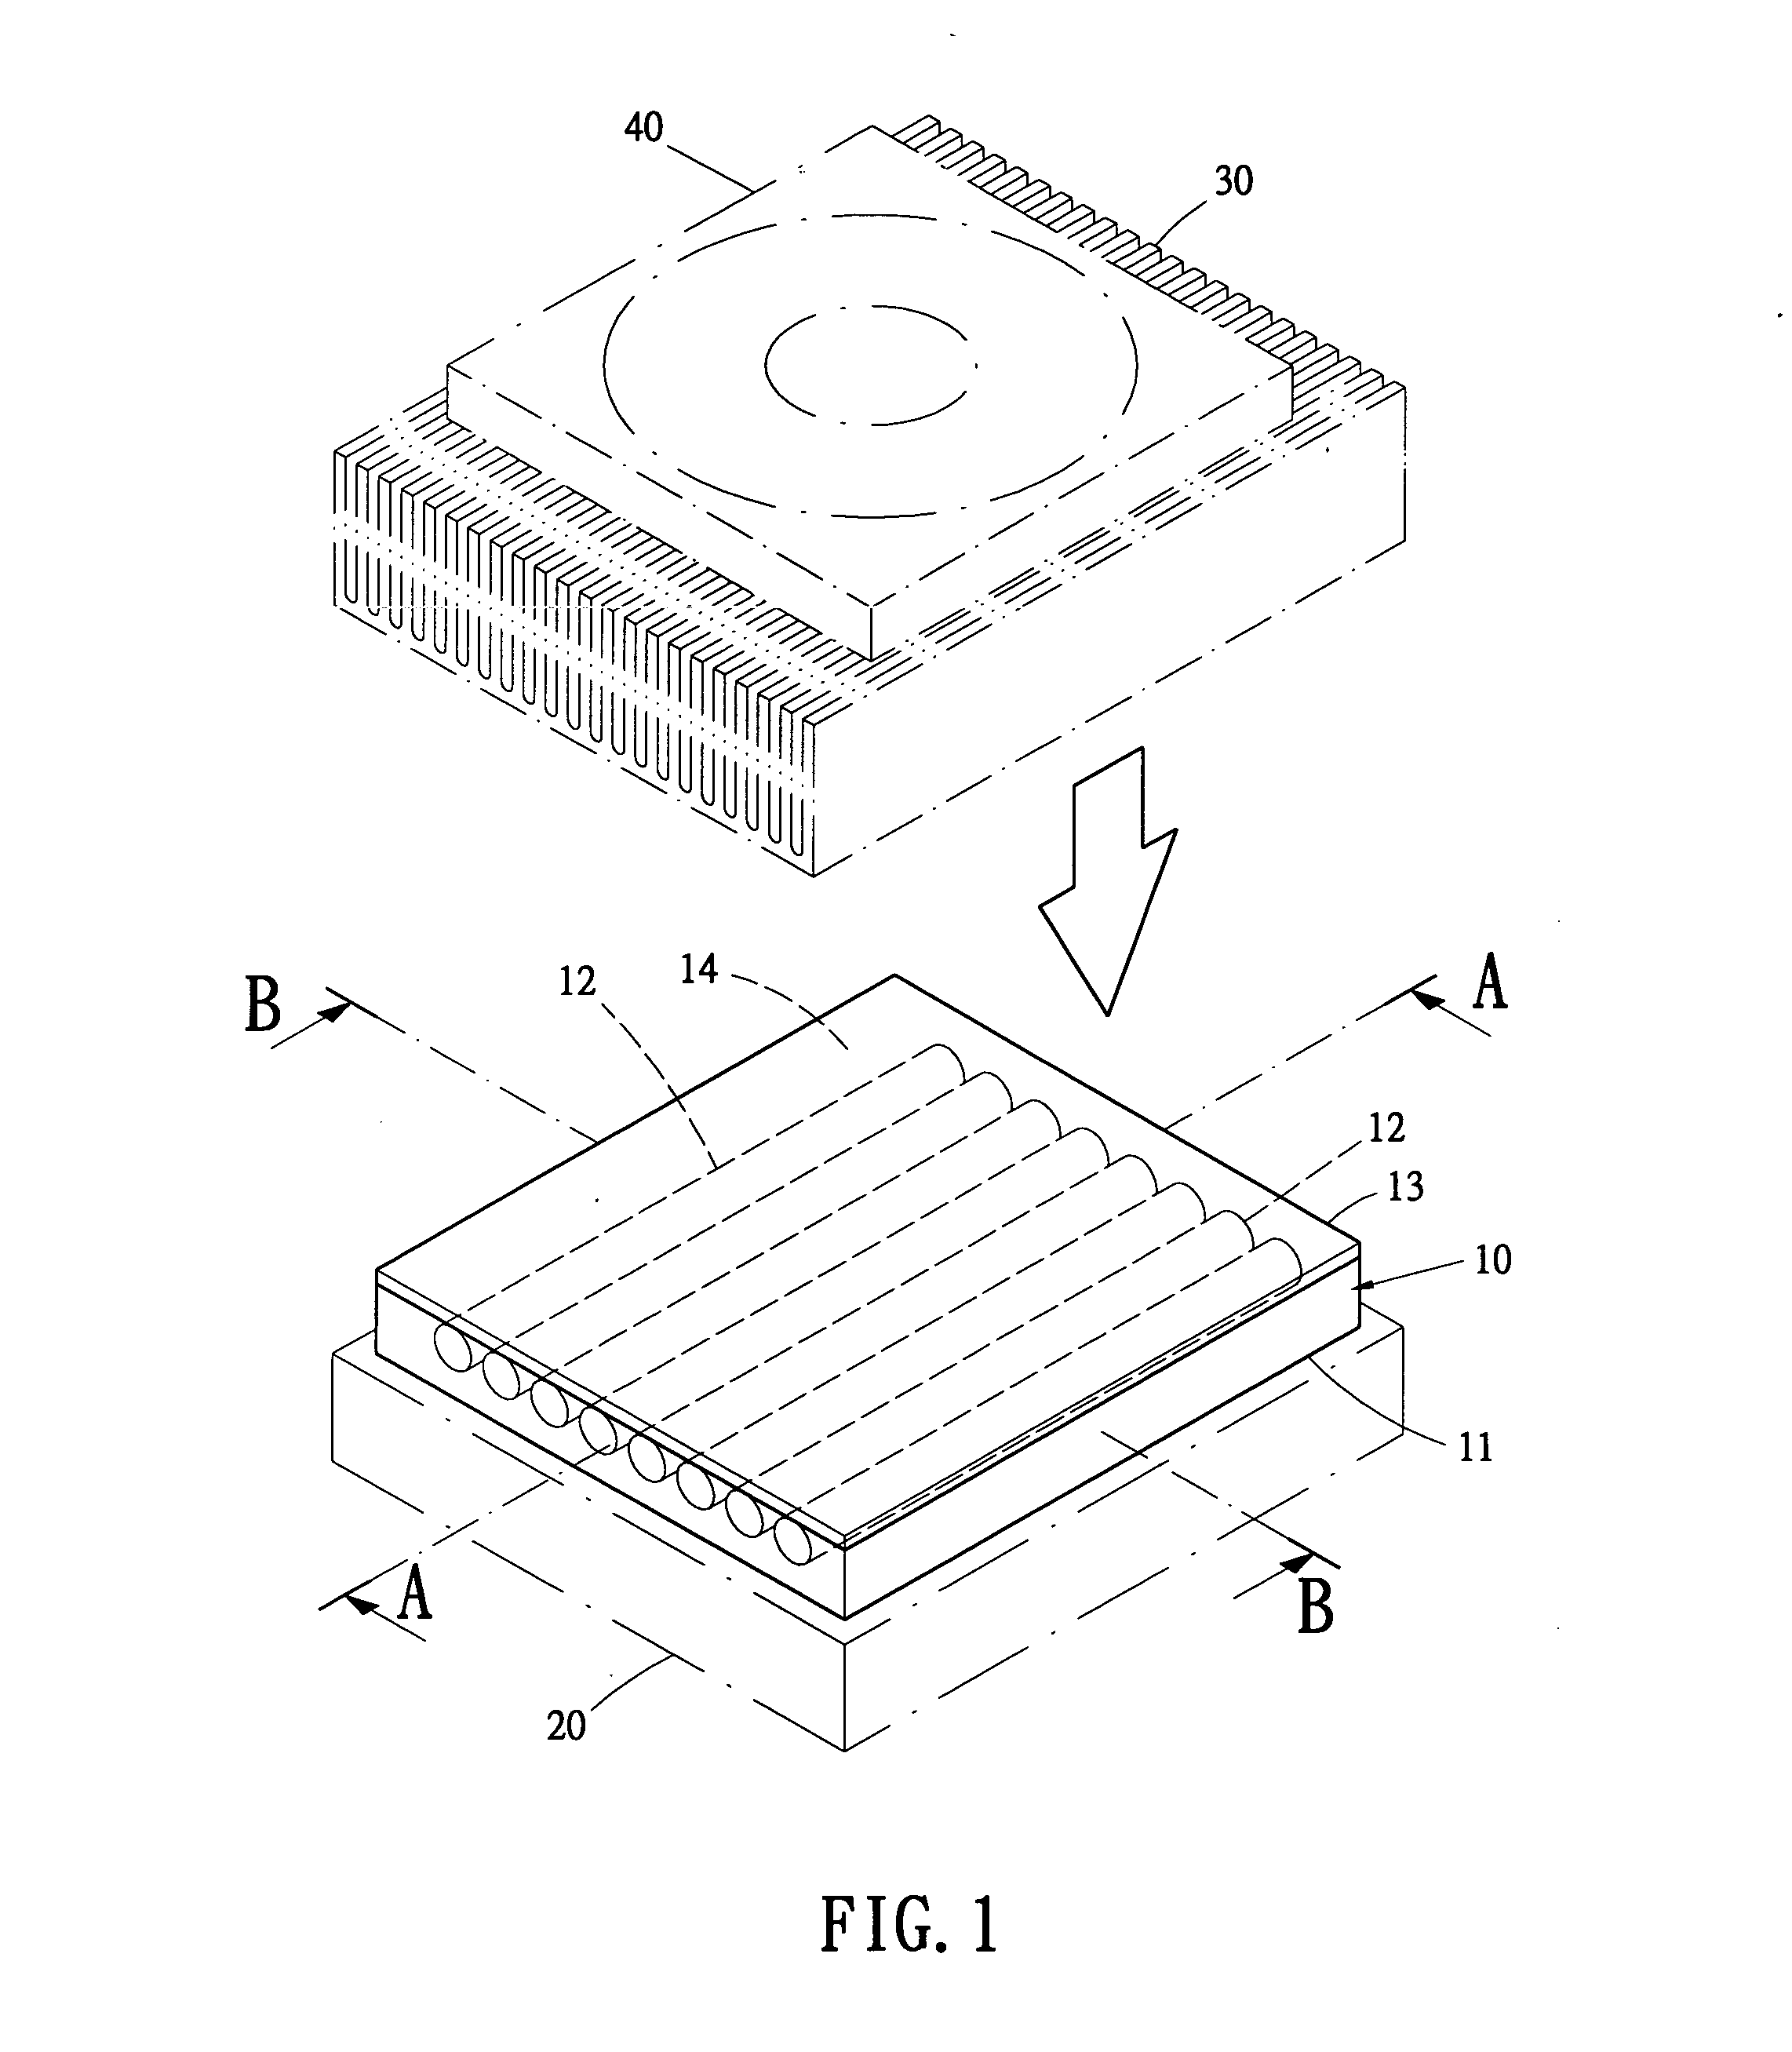 Heat conductive seat with liquid